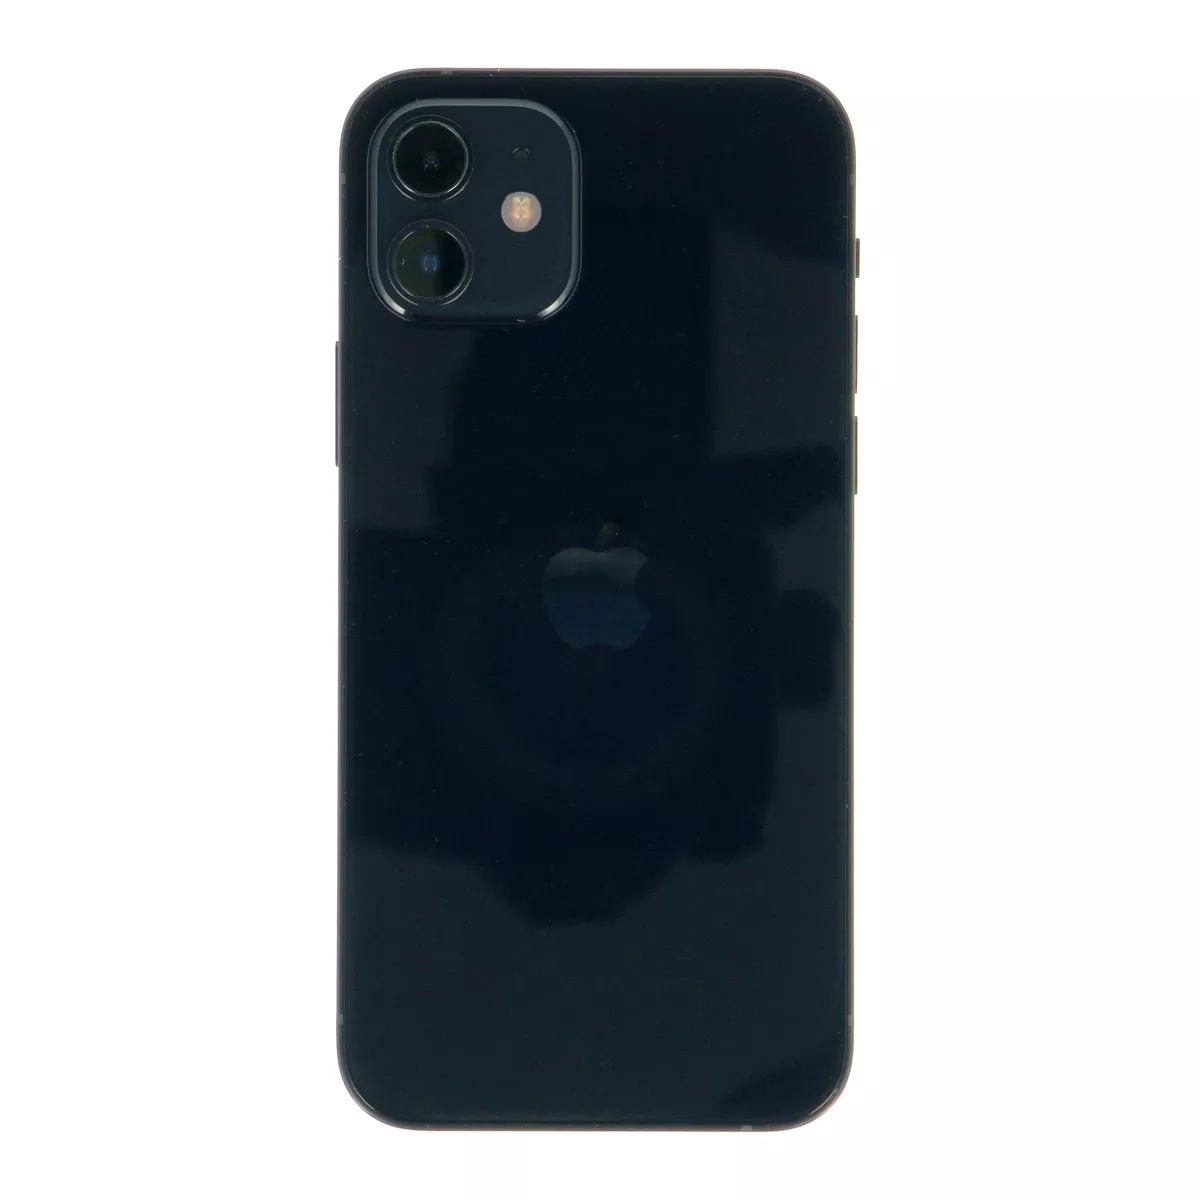 Apple iPhone 12 64 GB Black A+